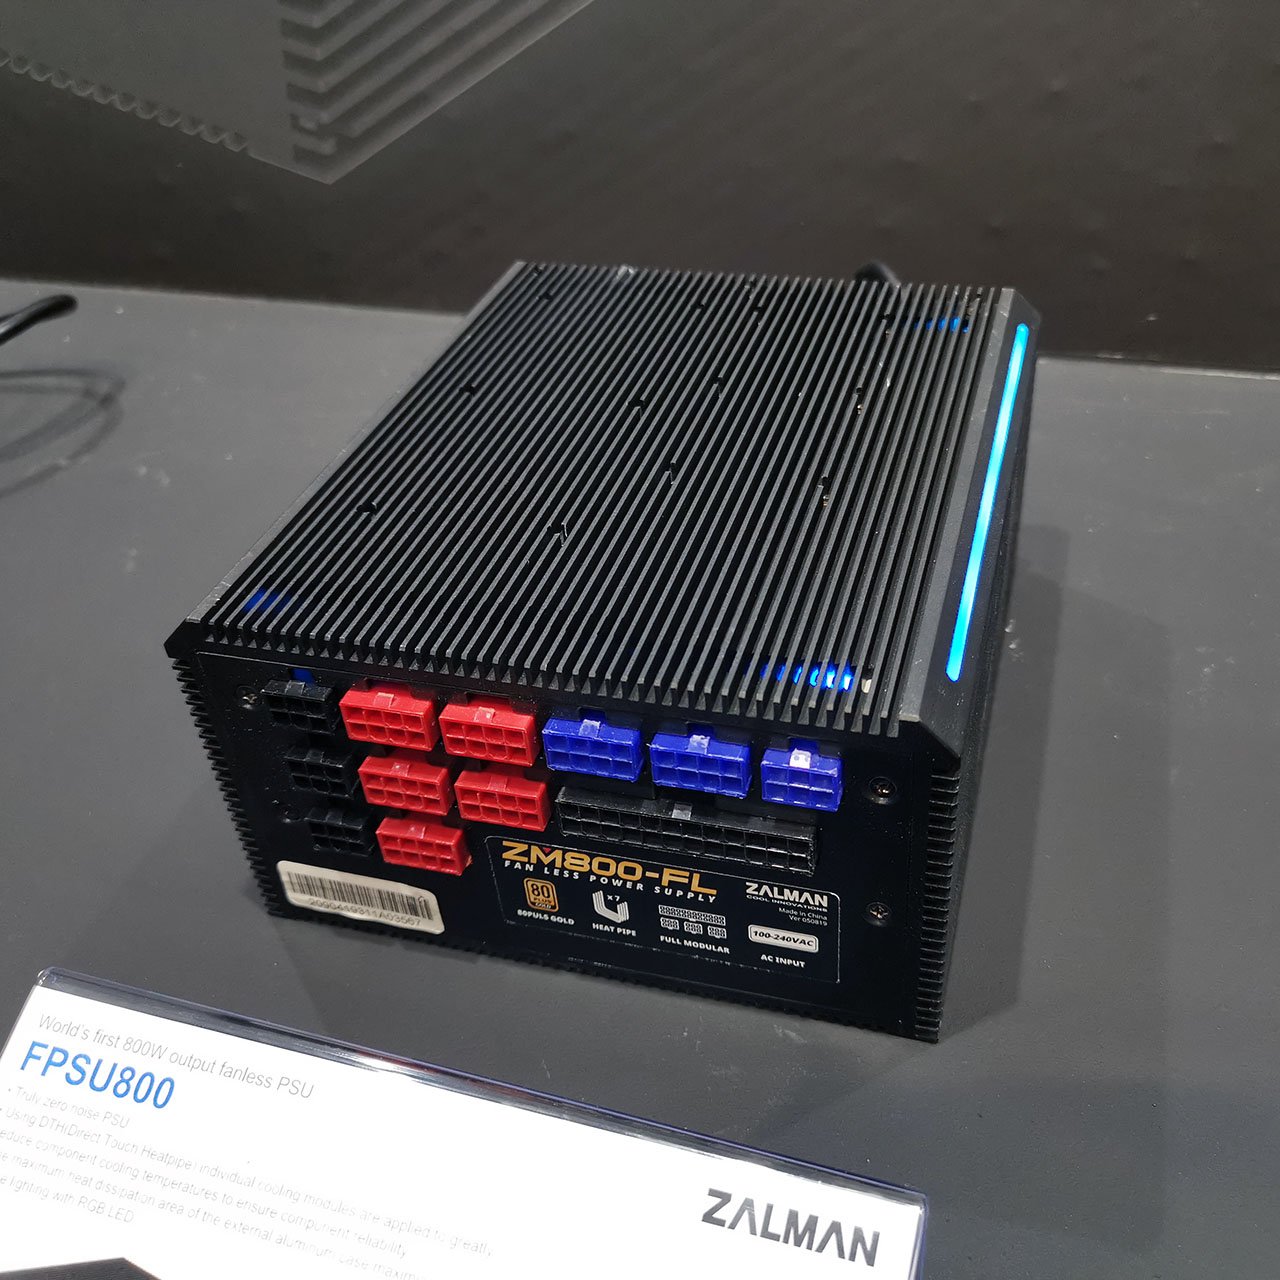 Zalman FPSU800